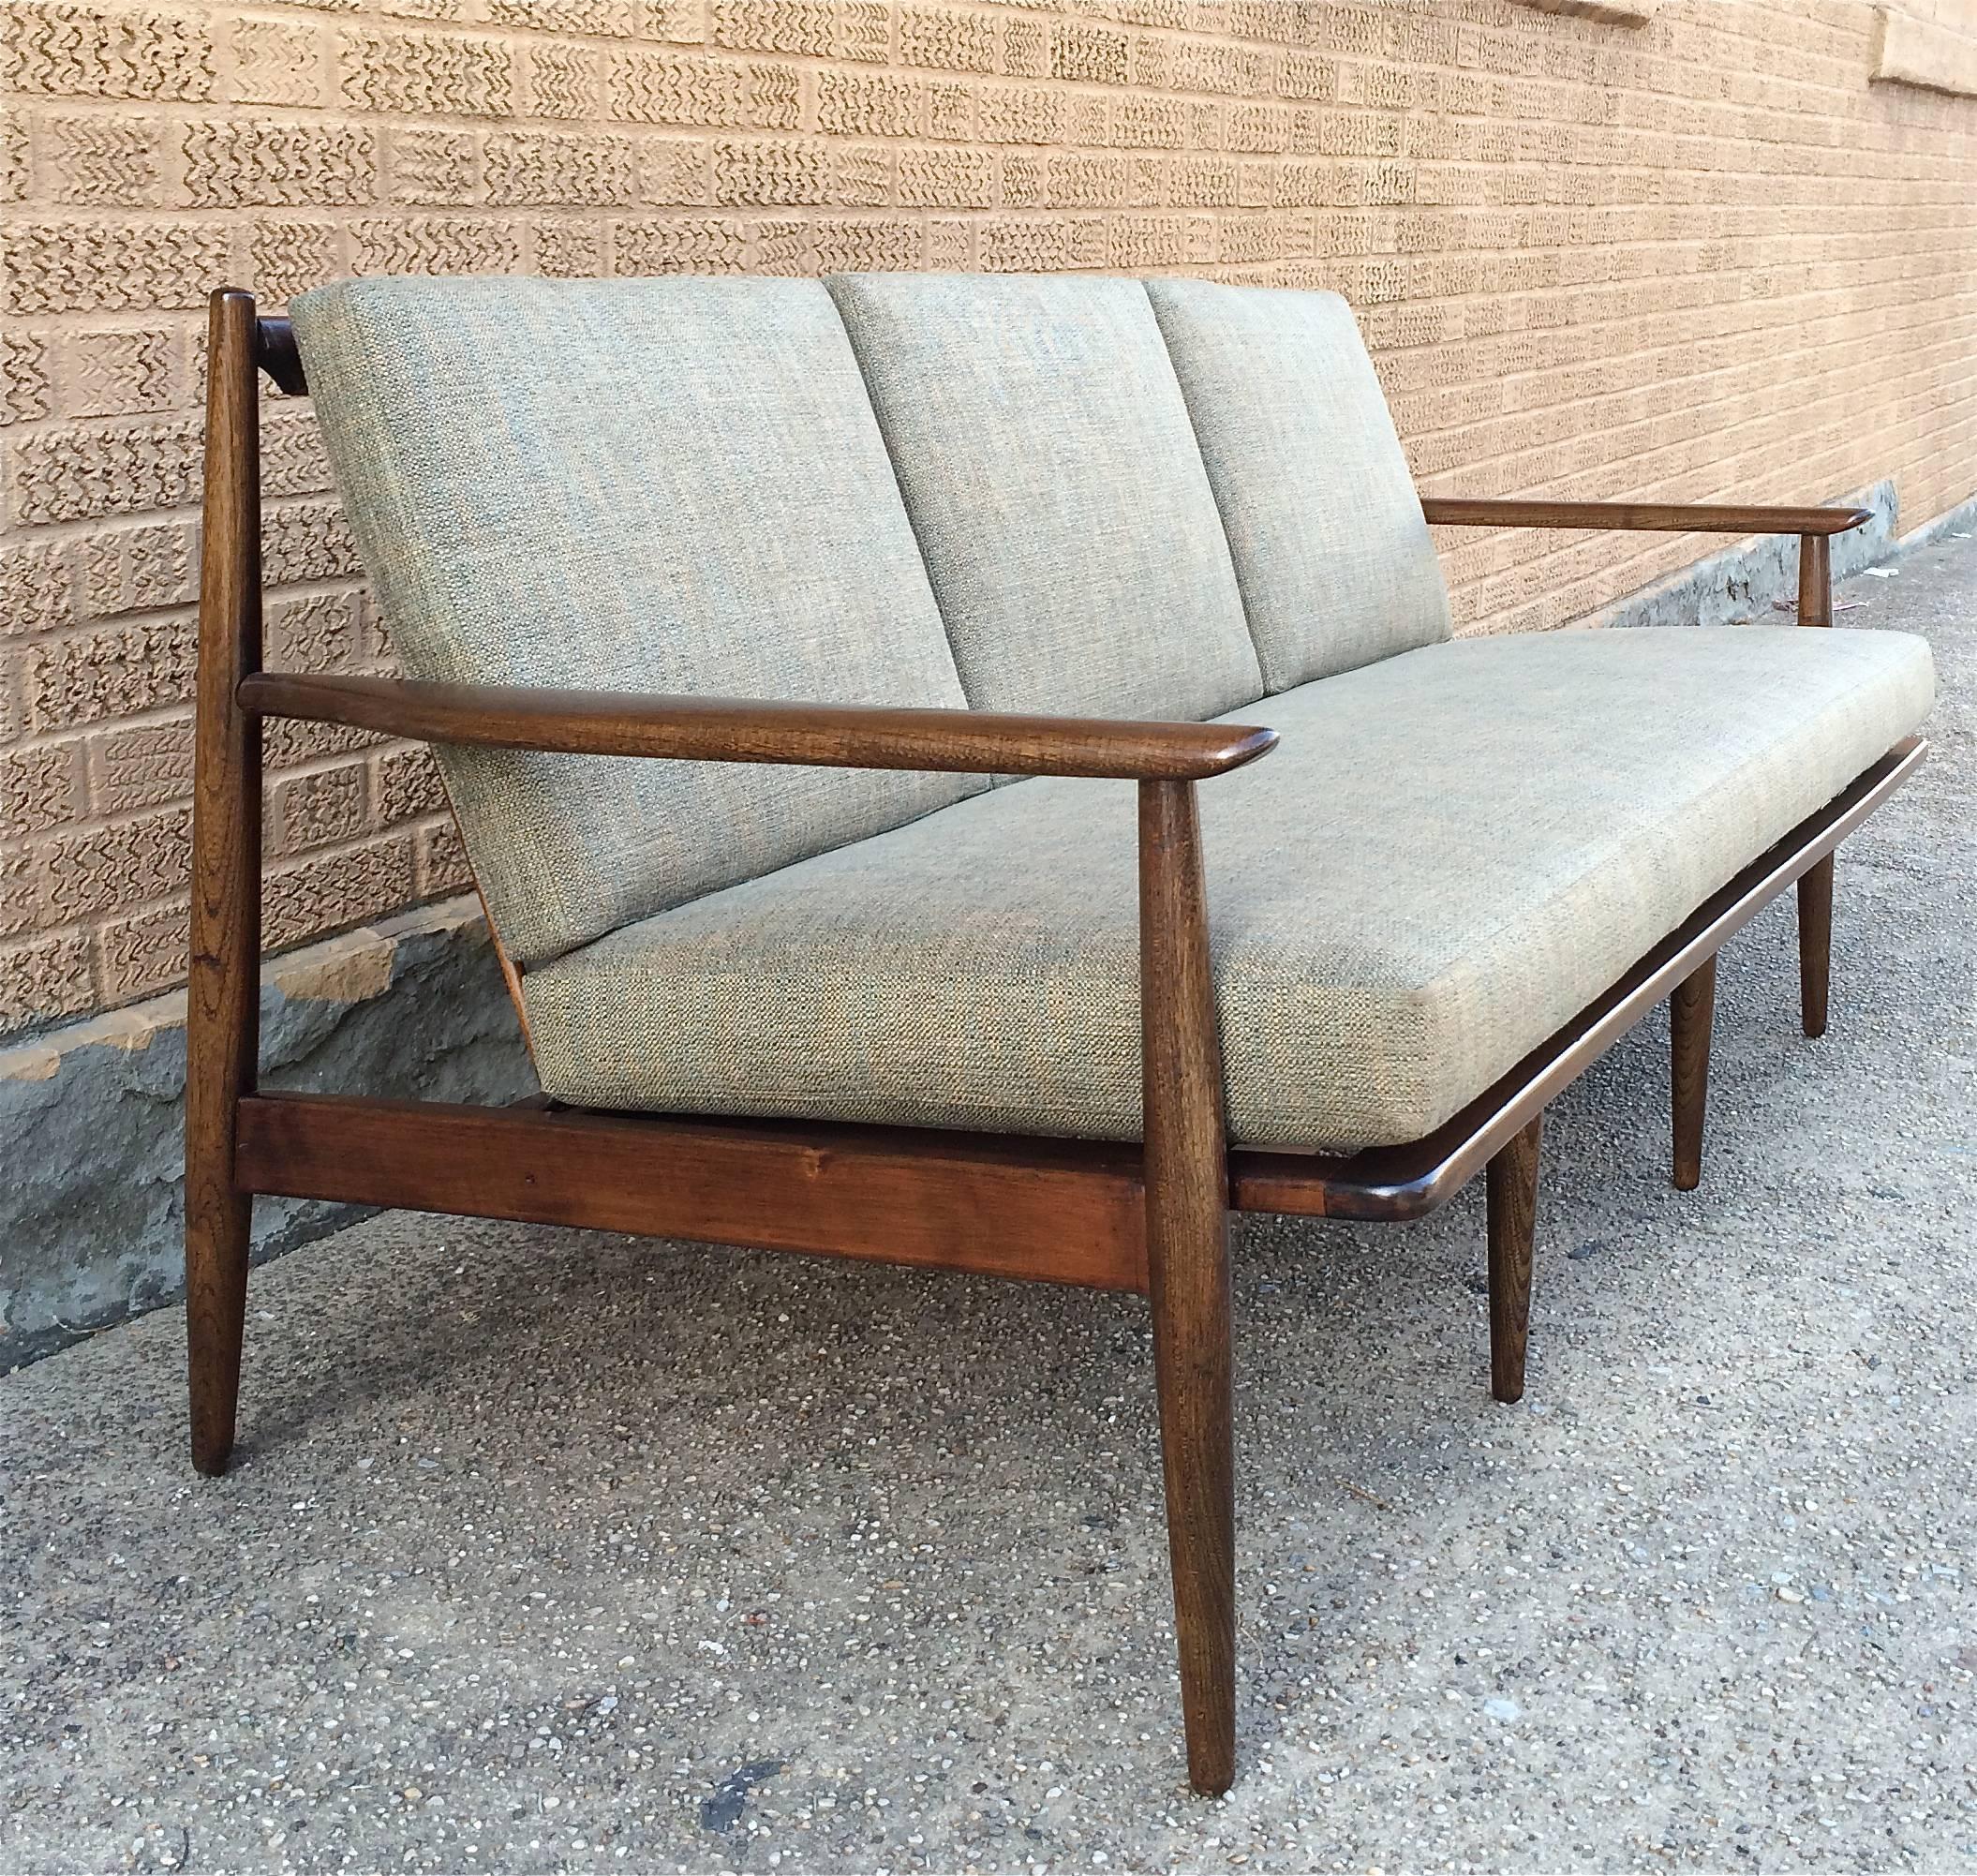 Danish modern, walnut frame sofa by Ib Kofod-Larsen is newly upholstered in a woven linen blend.